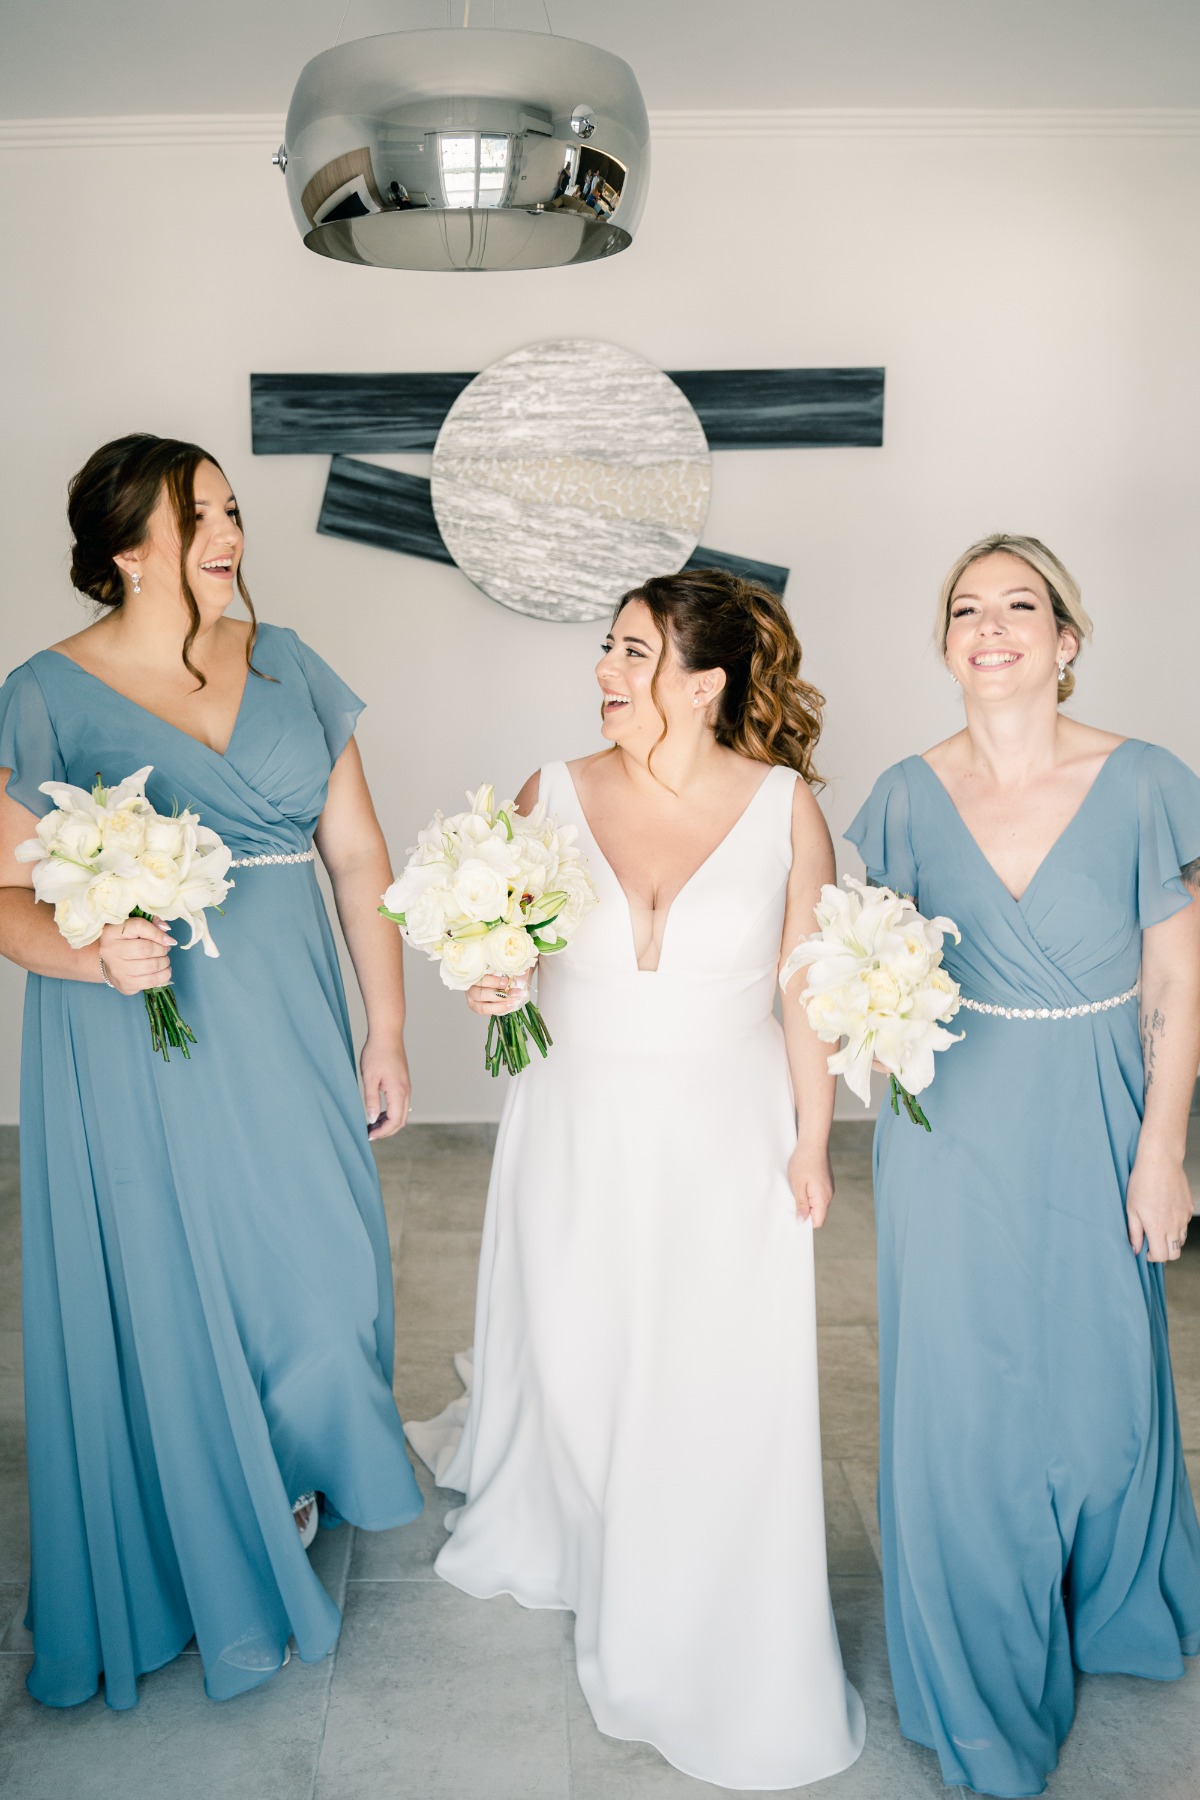 Greek bride in Kleinfelds wedding dress with blue bridesmaids